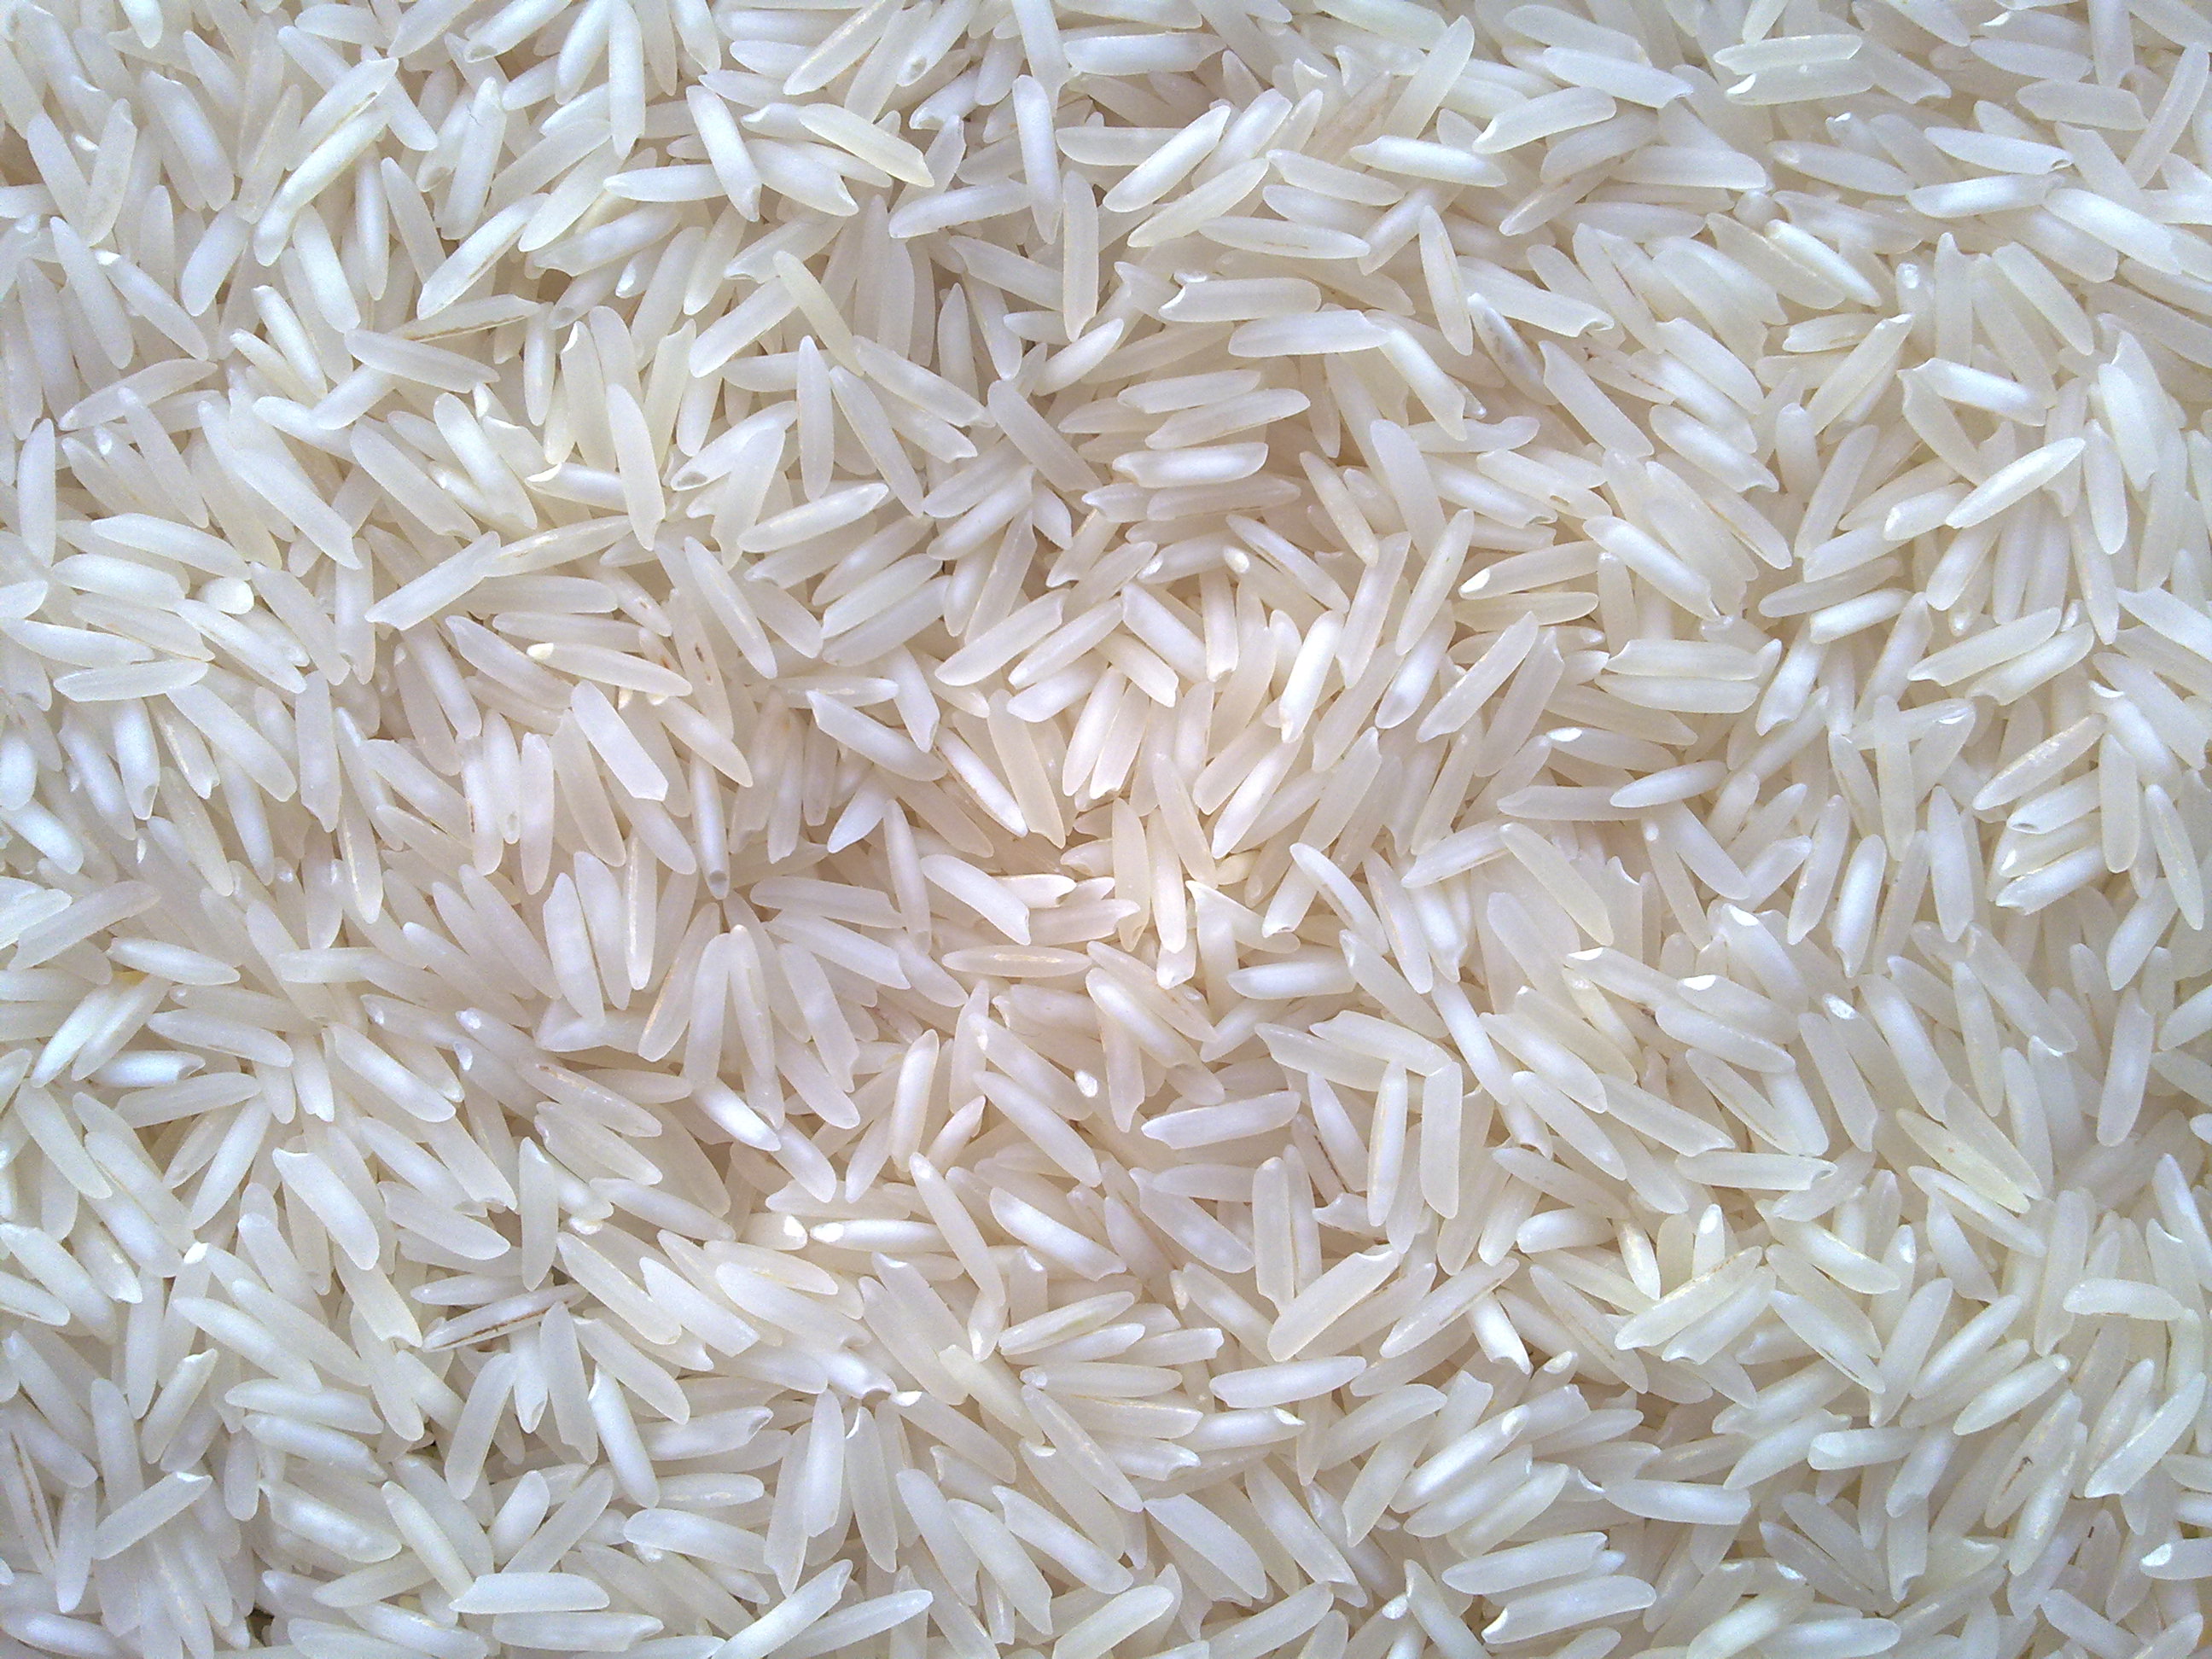 PUSA Basmati Raw Rice from Maxil Agro Industries